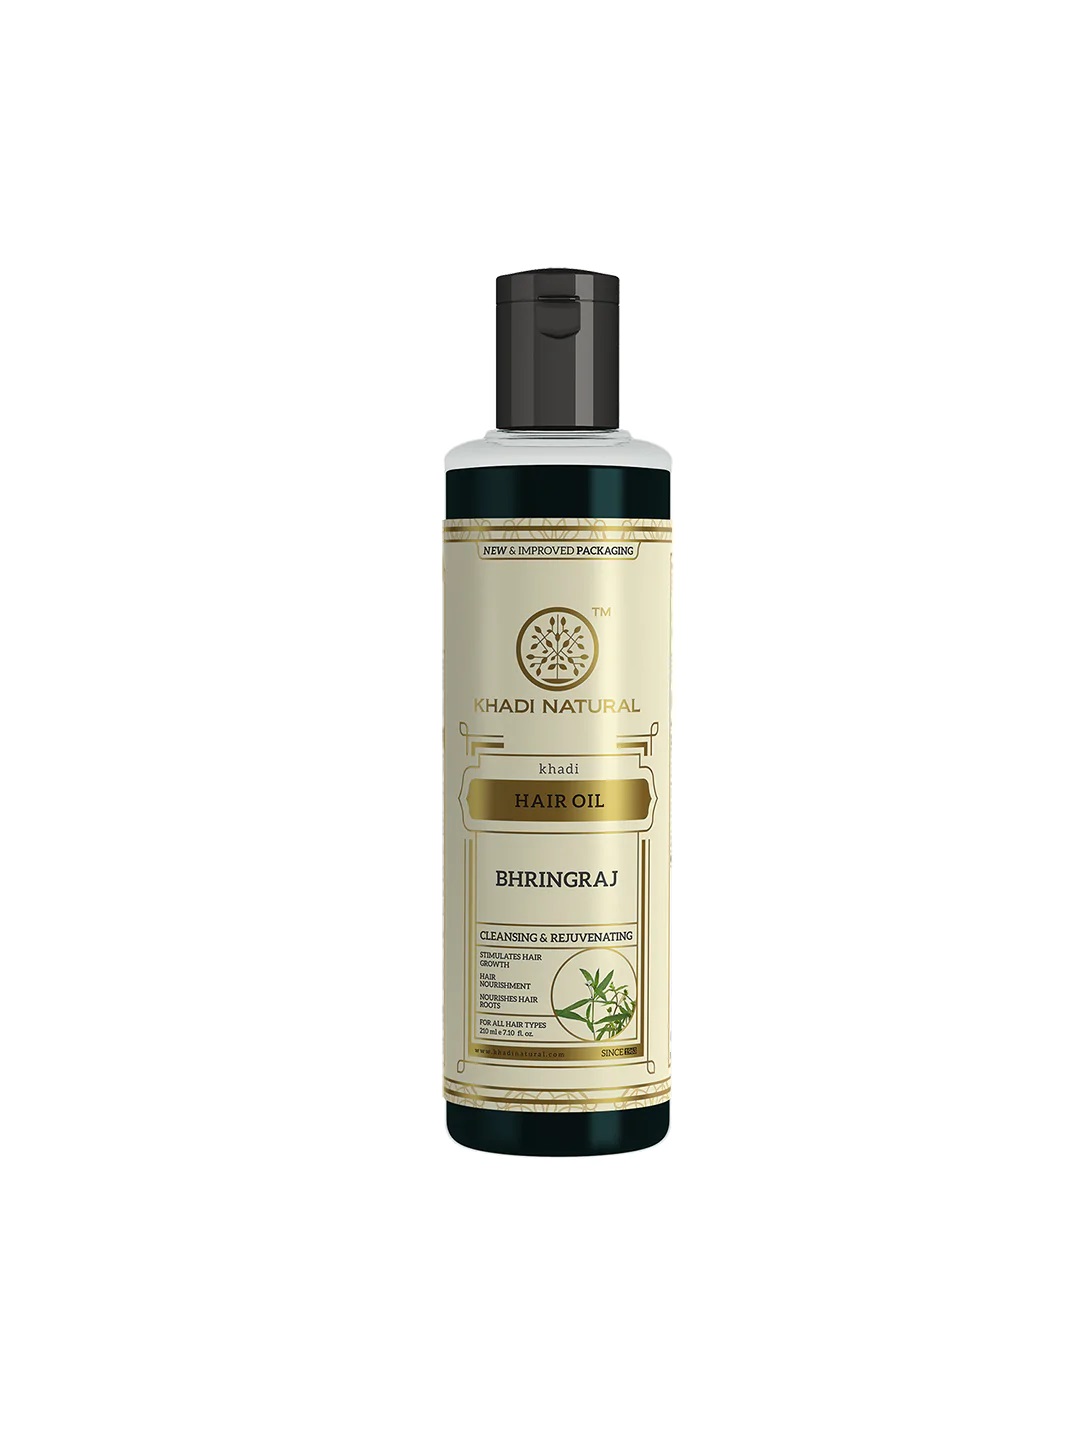 Hair Oil BHRINGRAJ, Cleansing & Rejuvenating, Khadi Natural (Масло для роста волос БРИНГРАДЖ, Очищение и омоложение, Кхади Нэчрл), 210 мл.